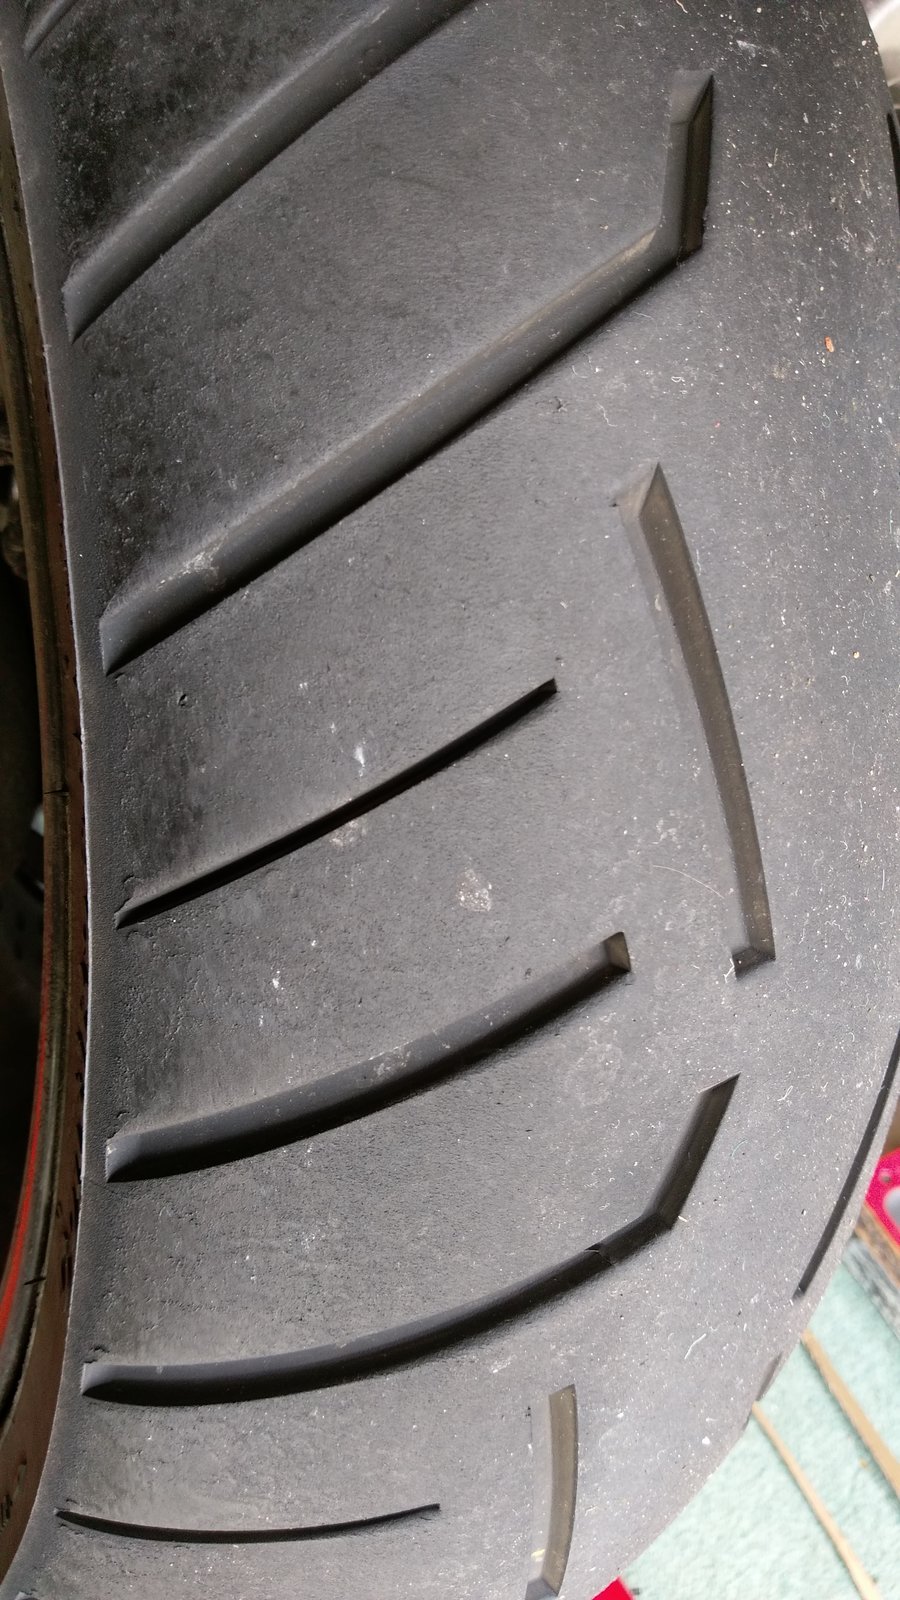 Tyre.jpg